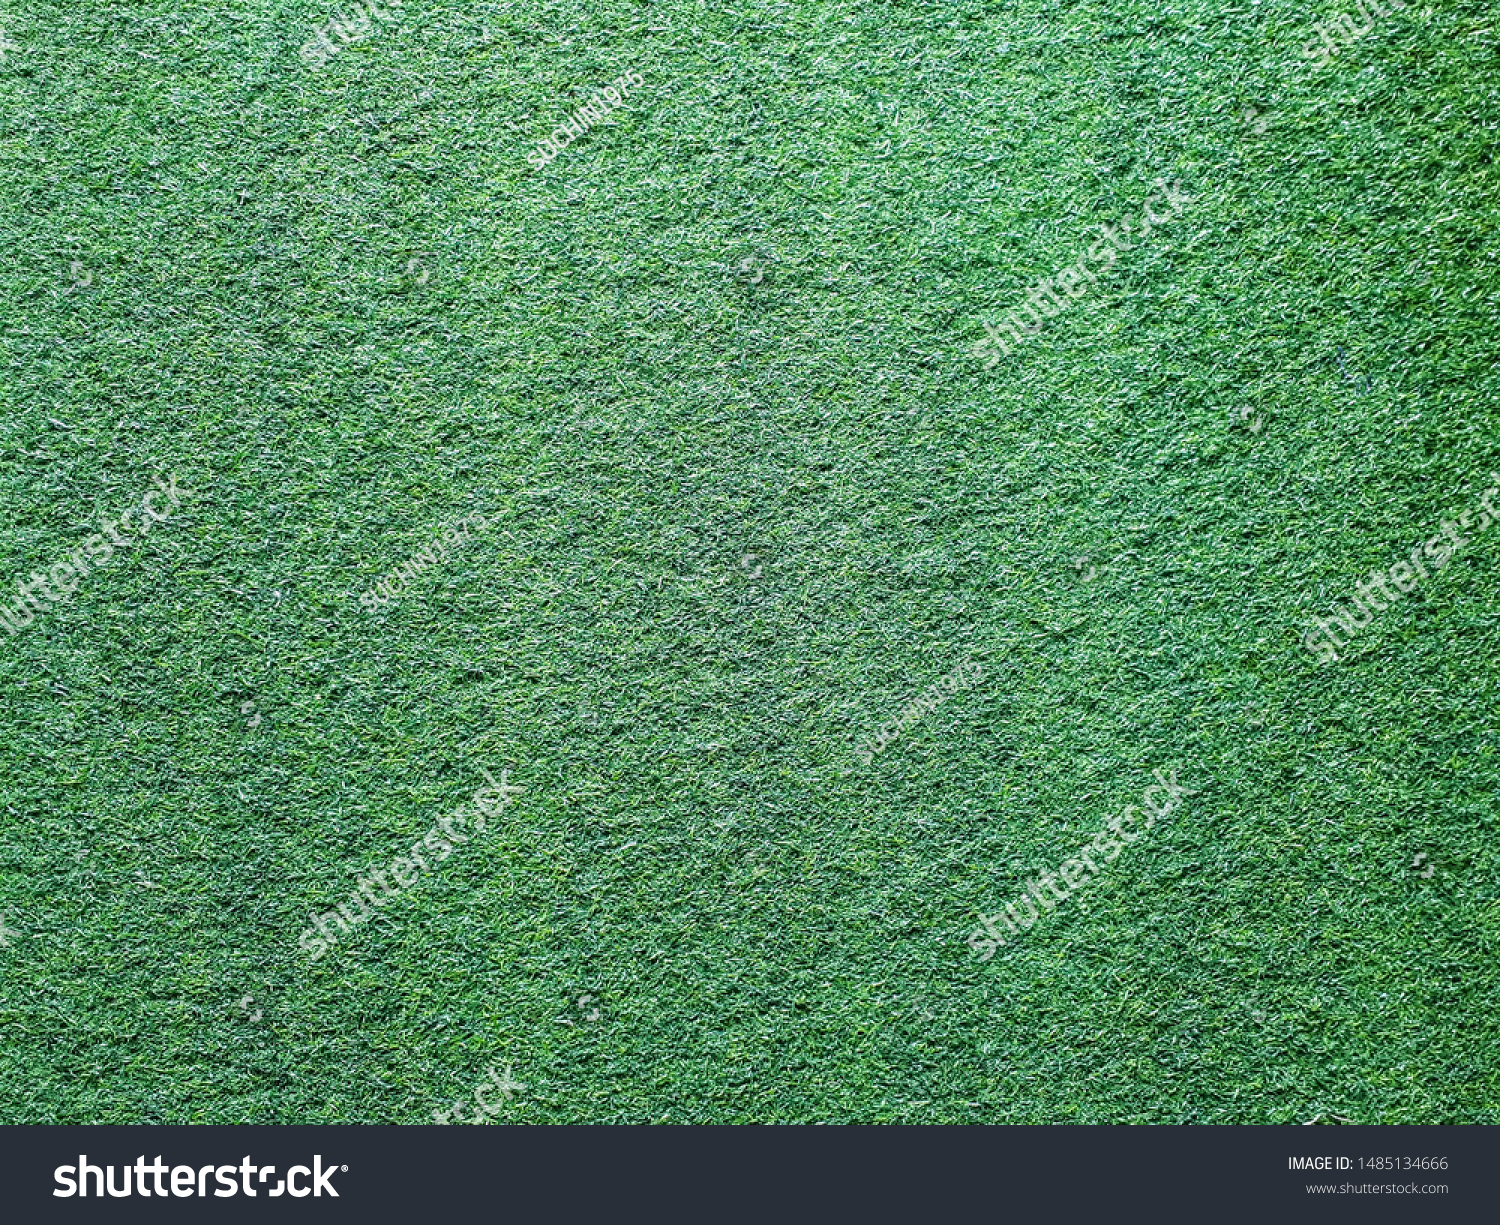 Green grass,Green background,Green carpet,Green lawn,background #1485134666